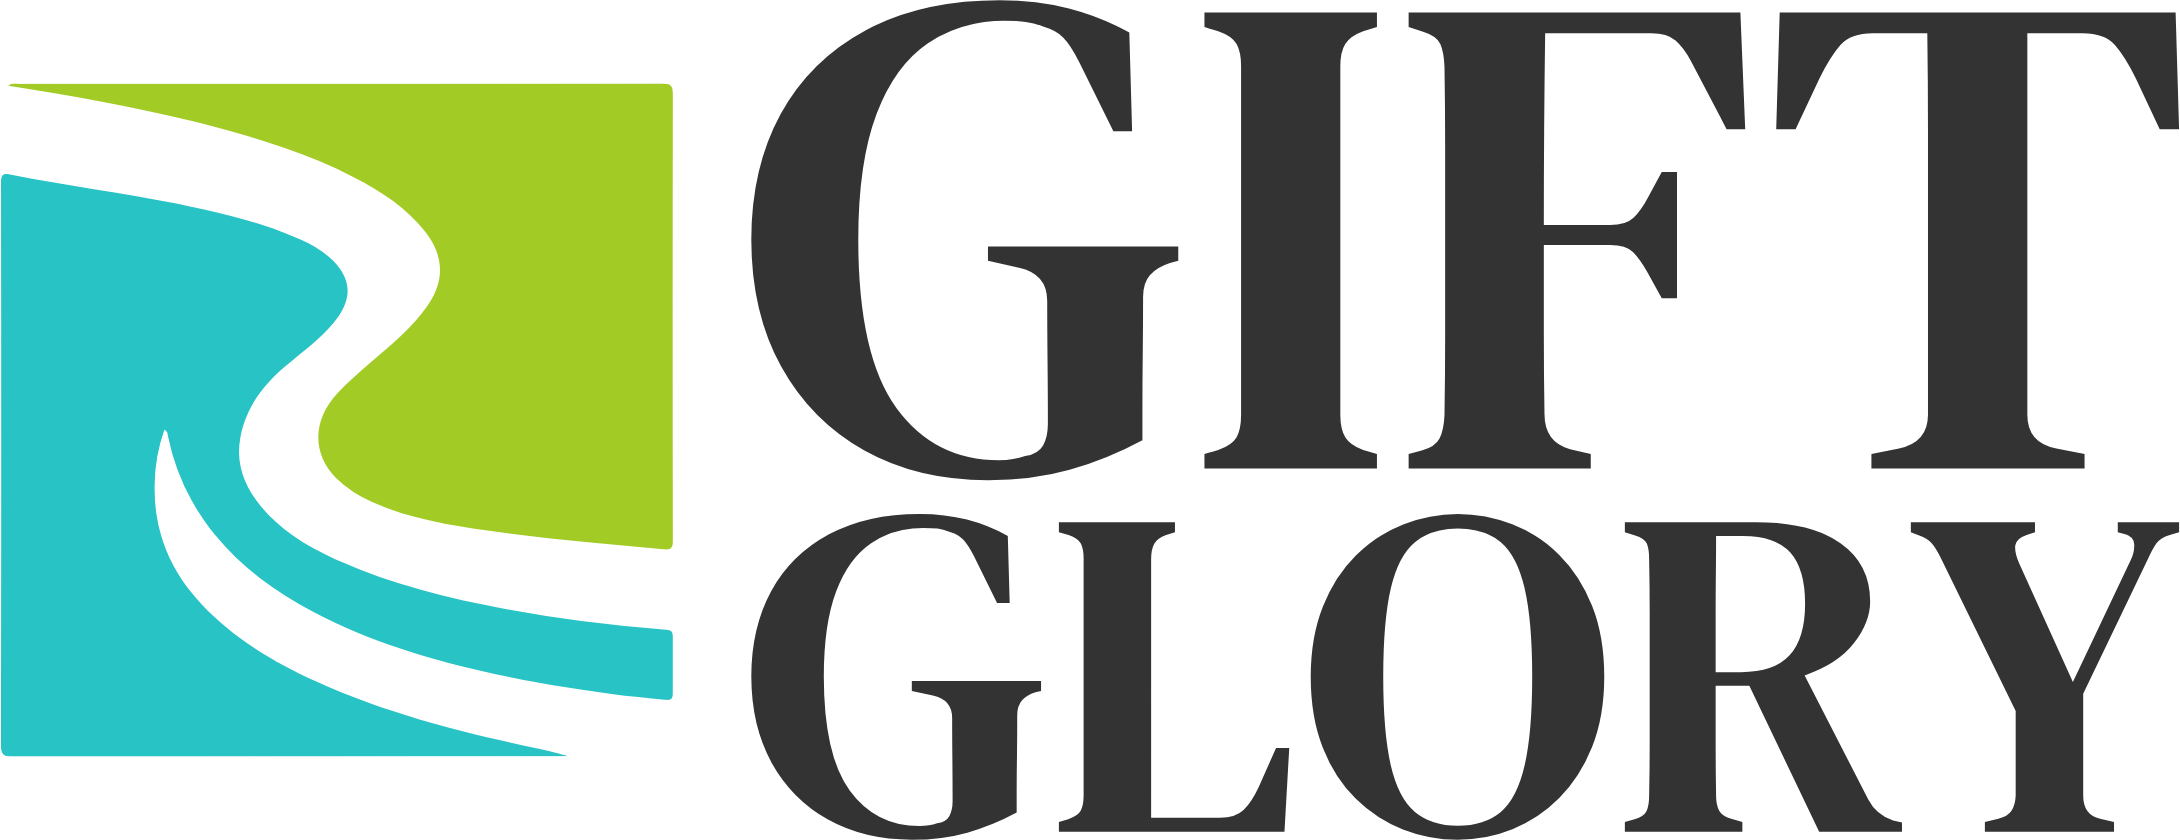 Gift Glory Logo, giftglory.net